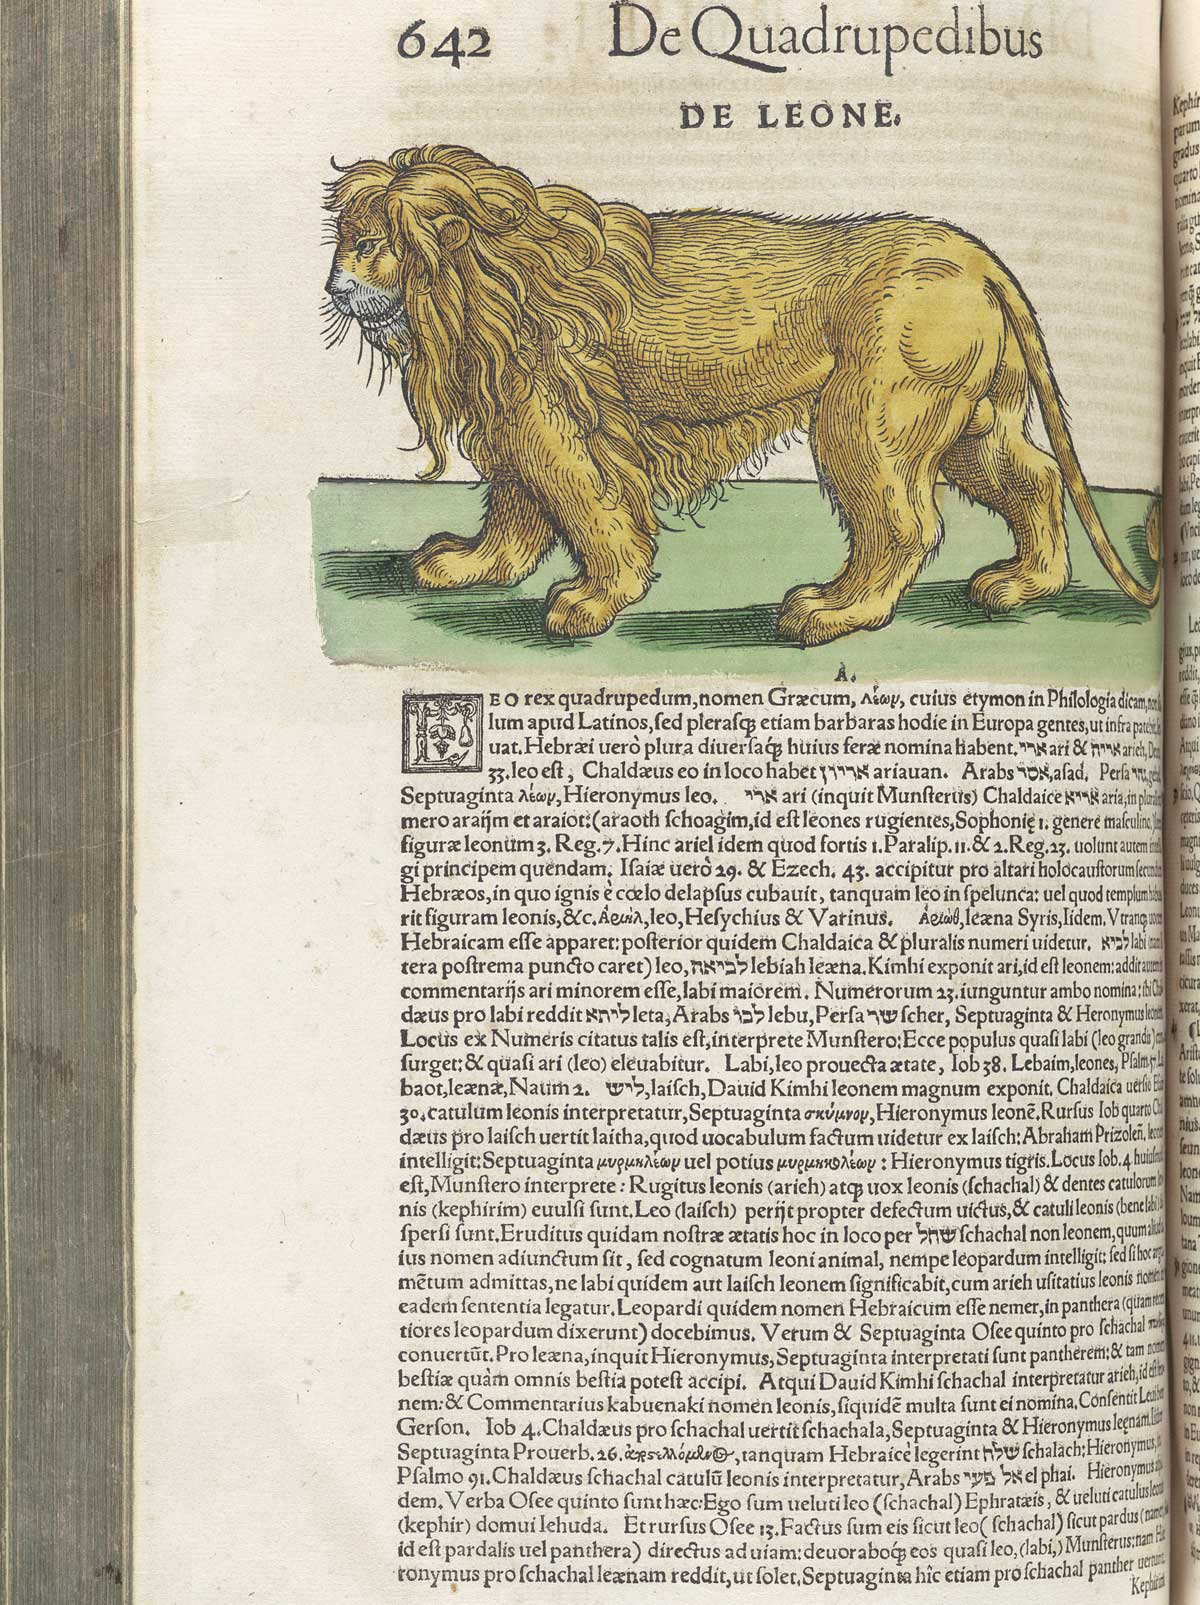 Page 642 from volume 1 of Conrad Gessner's Conradi Gesneri medici Tigurini Historiae animalium, featuring the colored woodcut of de leone or a lion.